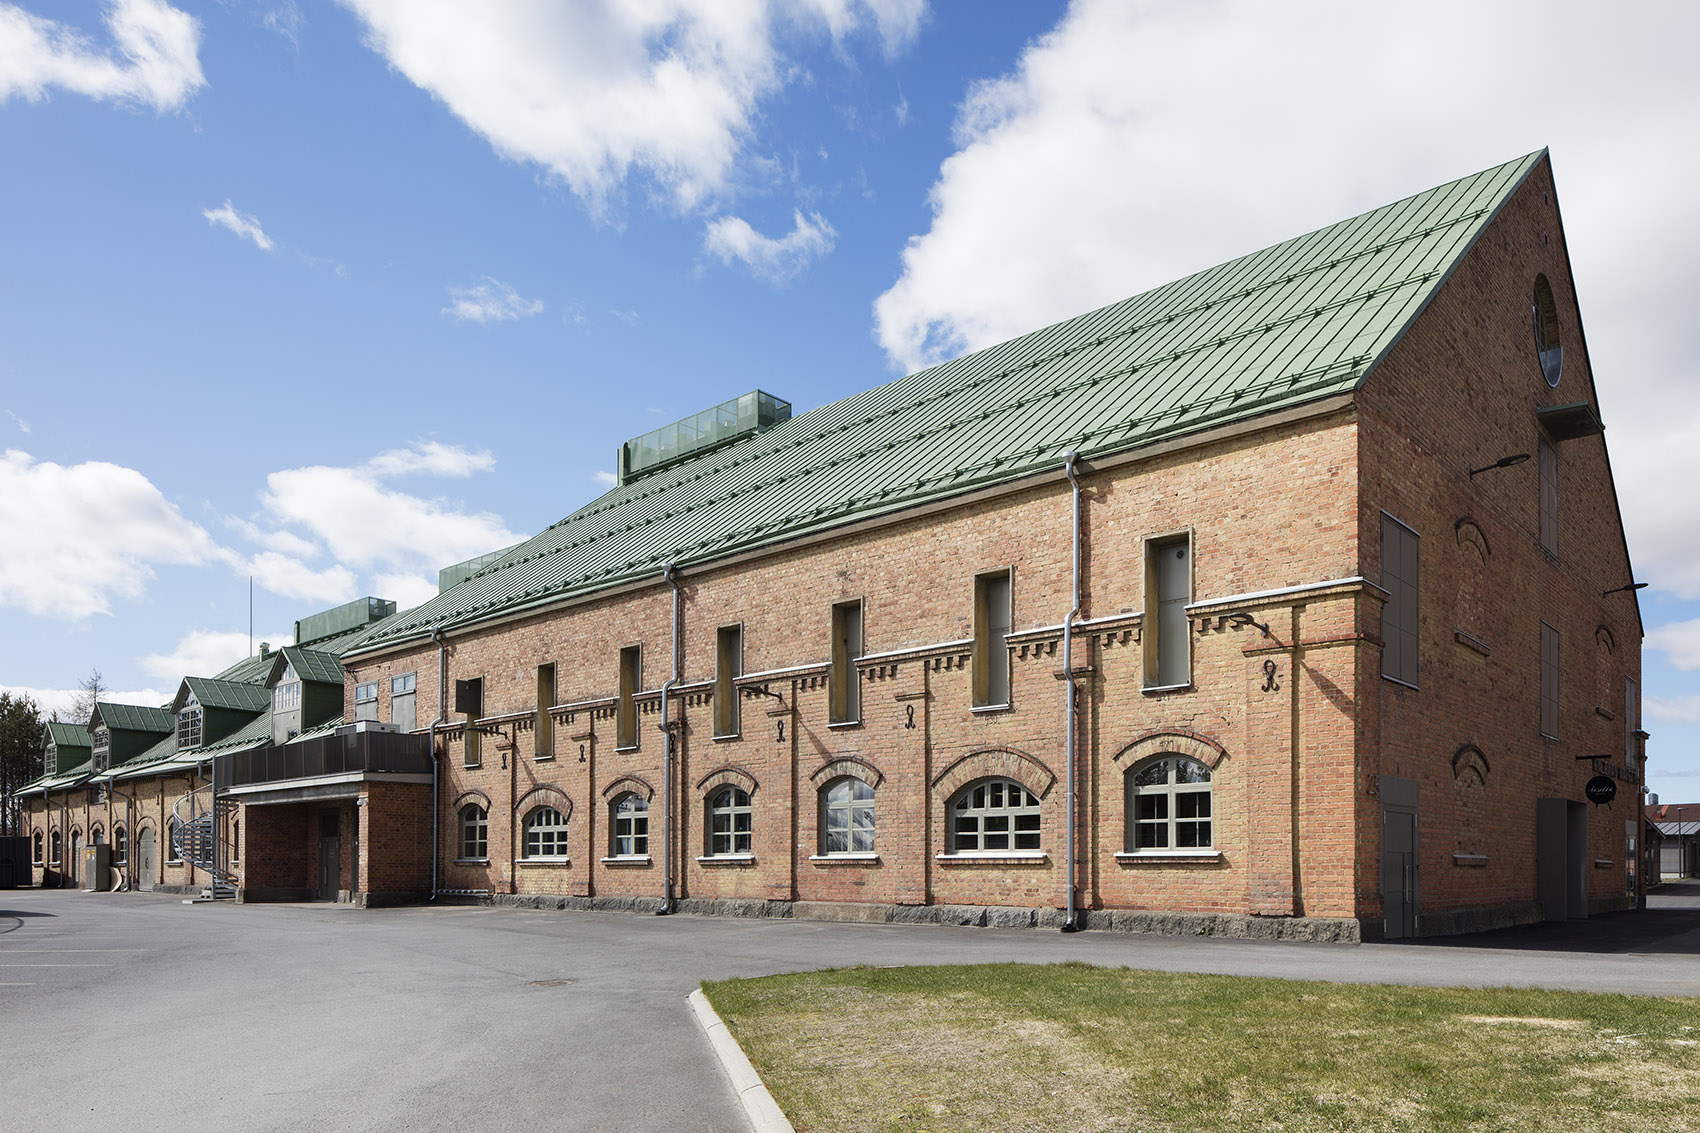 Kalevan Navetta文化艺术中心，芬兰/材料与结构的交响曲-8